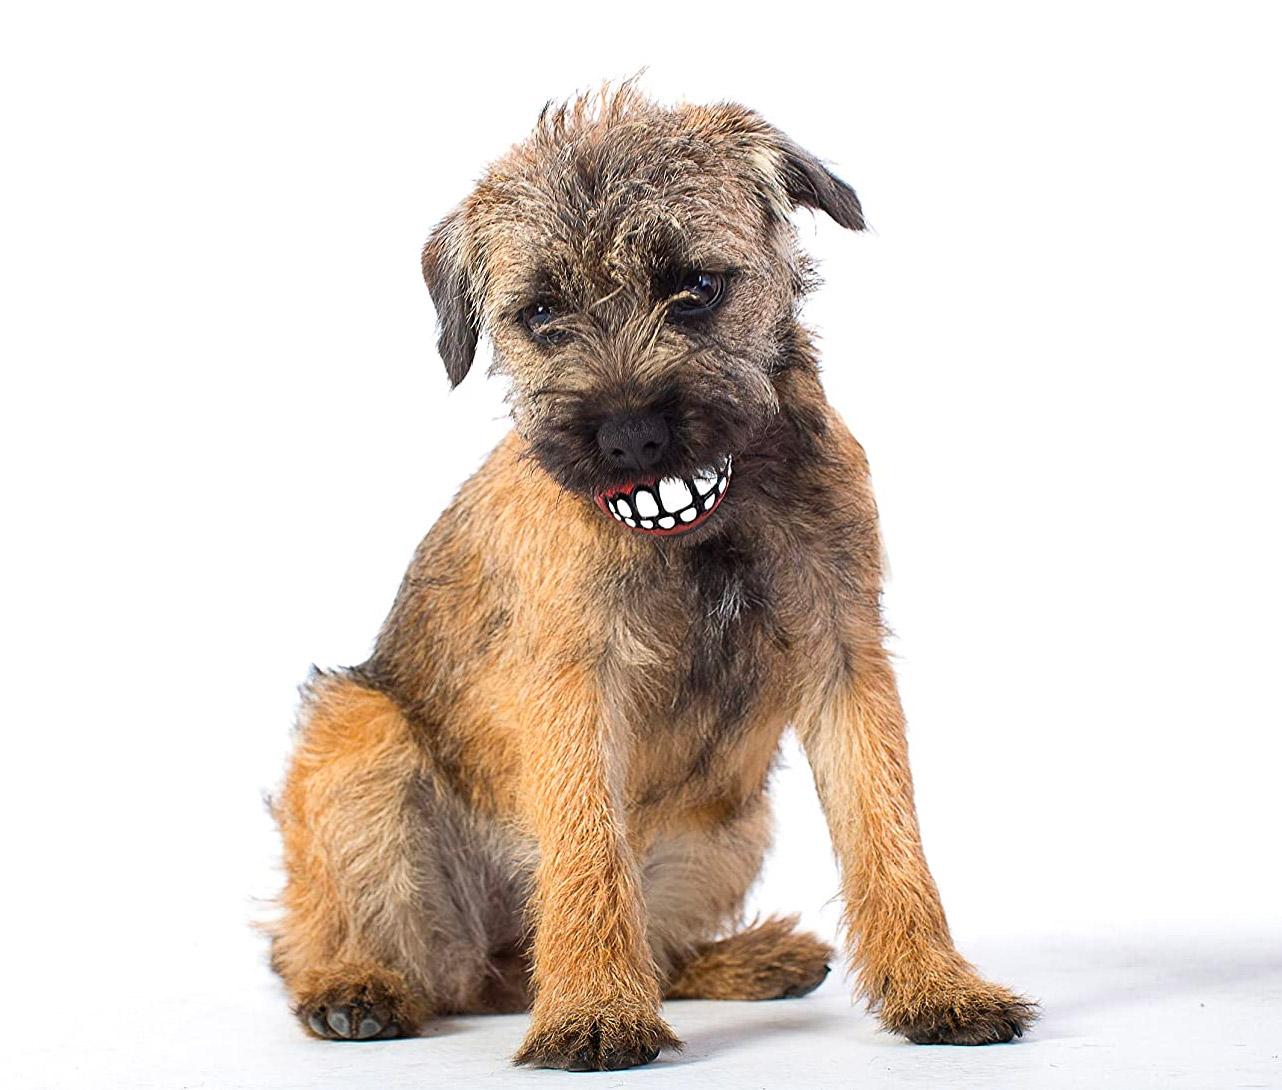 Funny dog ball teeth - Dog Ball Gives Your Dog Human Teeth